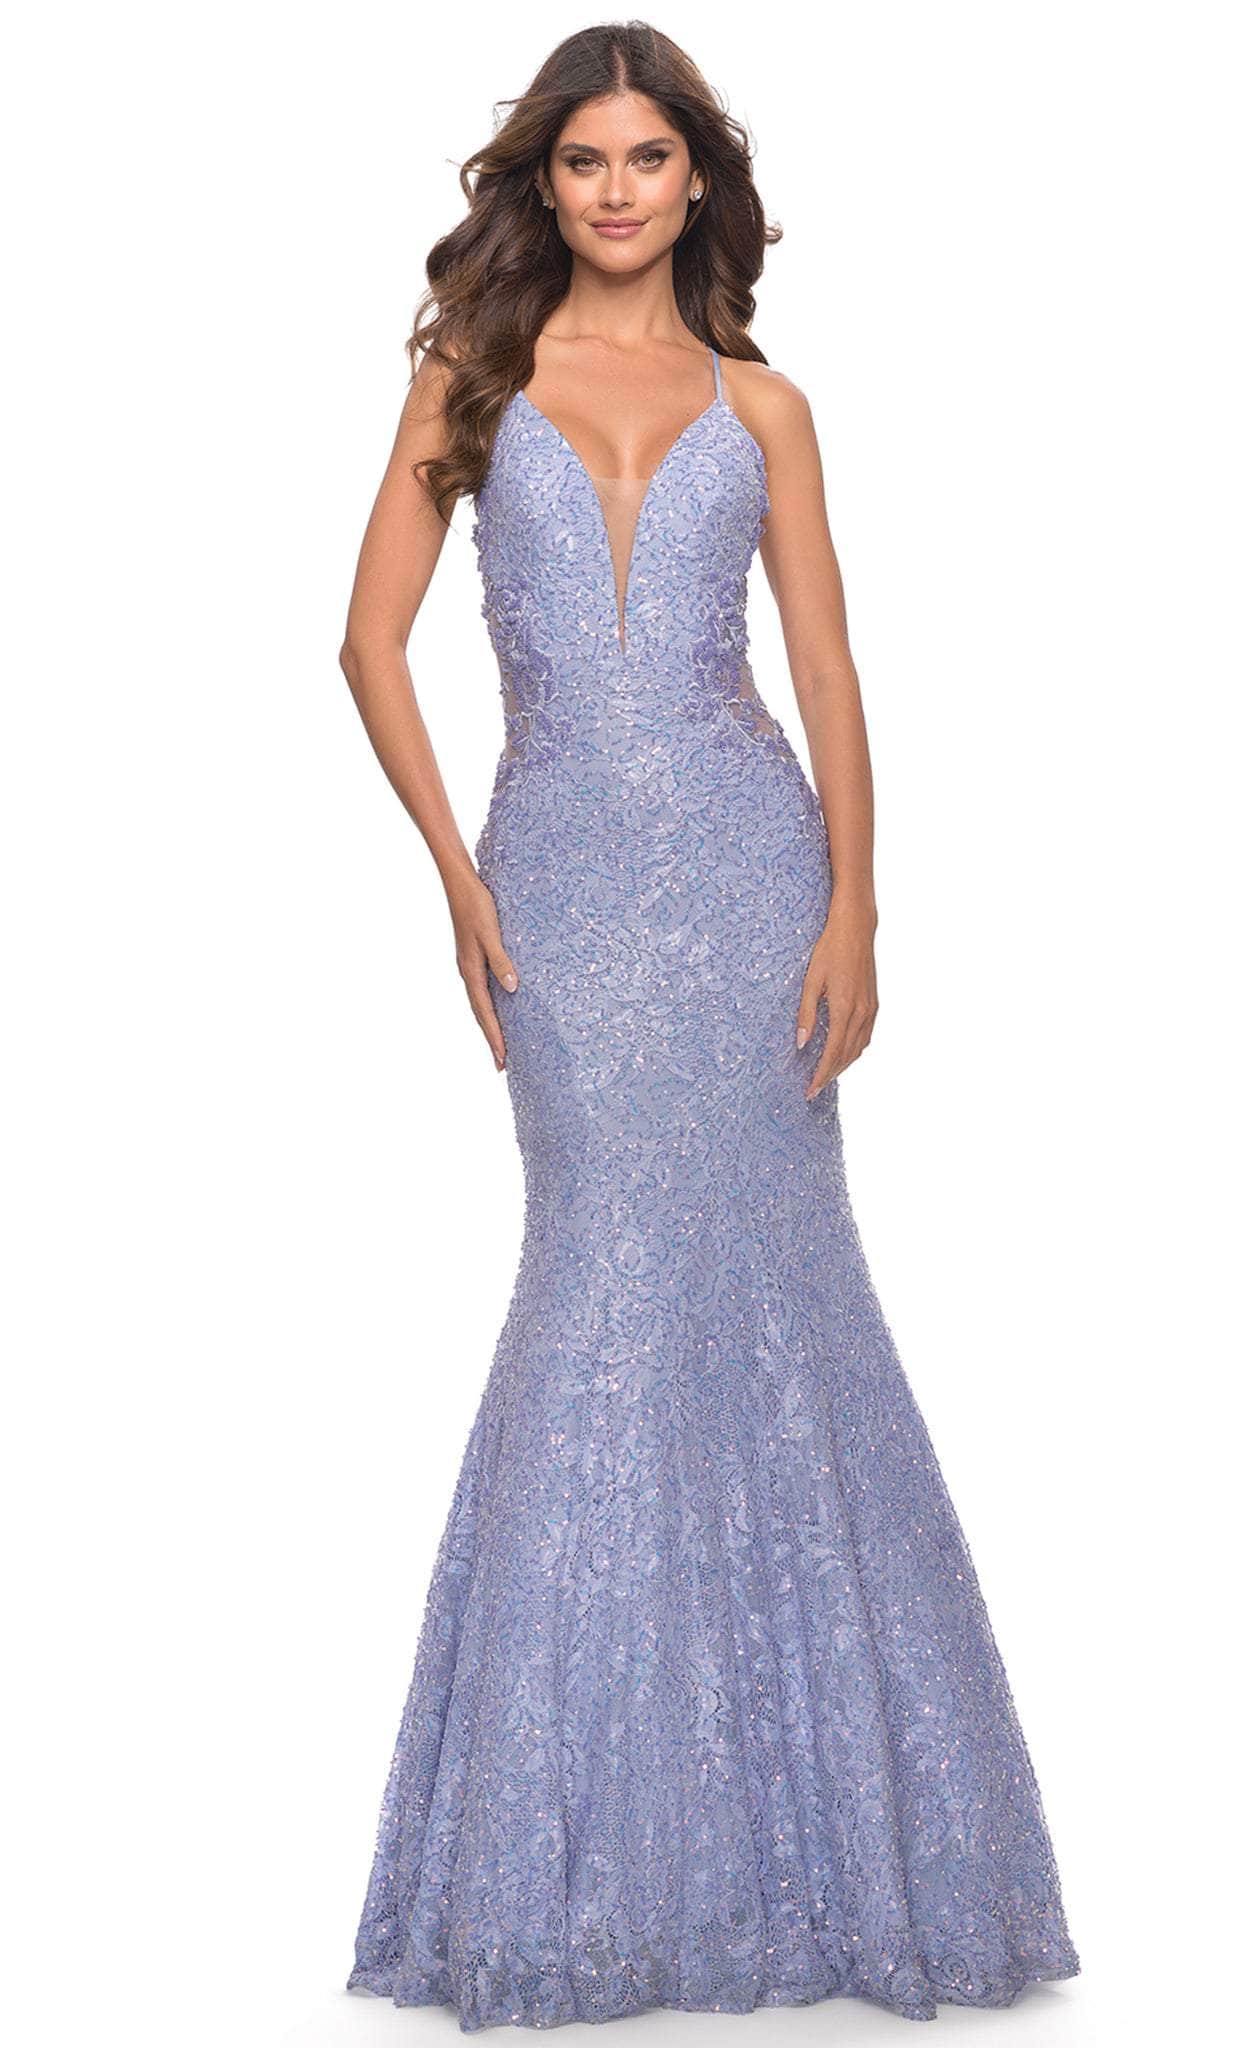 La Femme 31354 - Beaded Sleeveless Prom Dress
